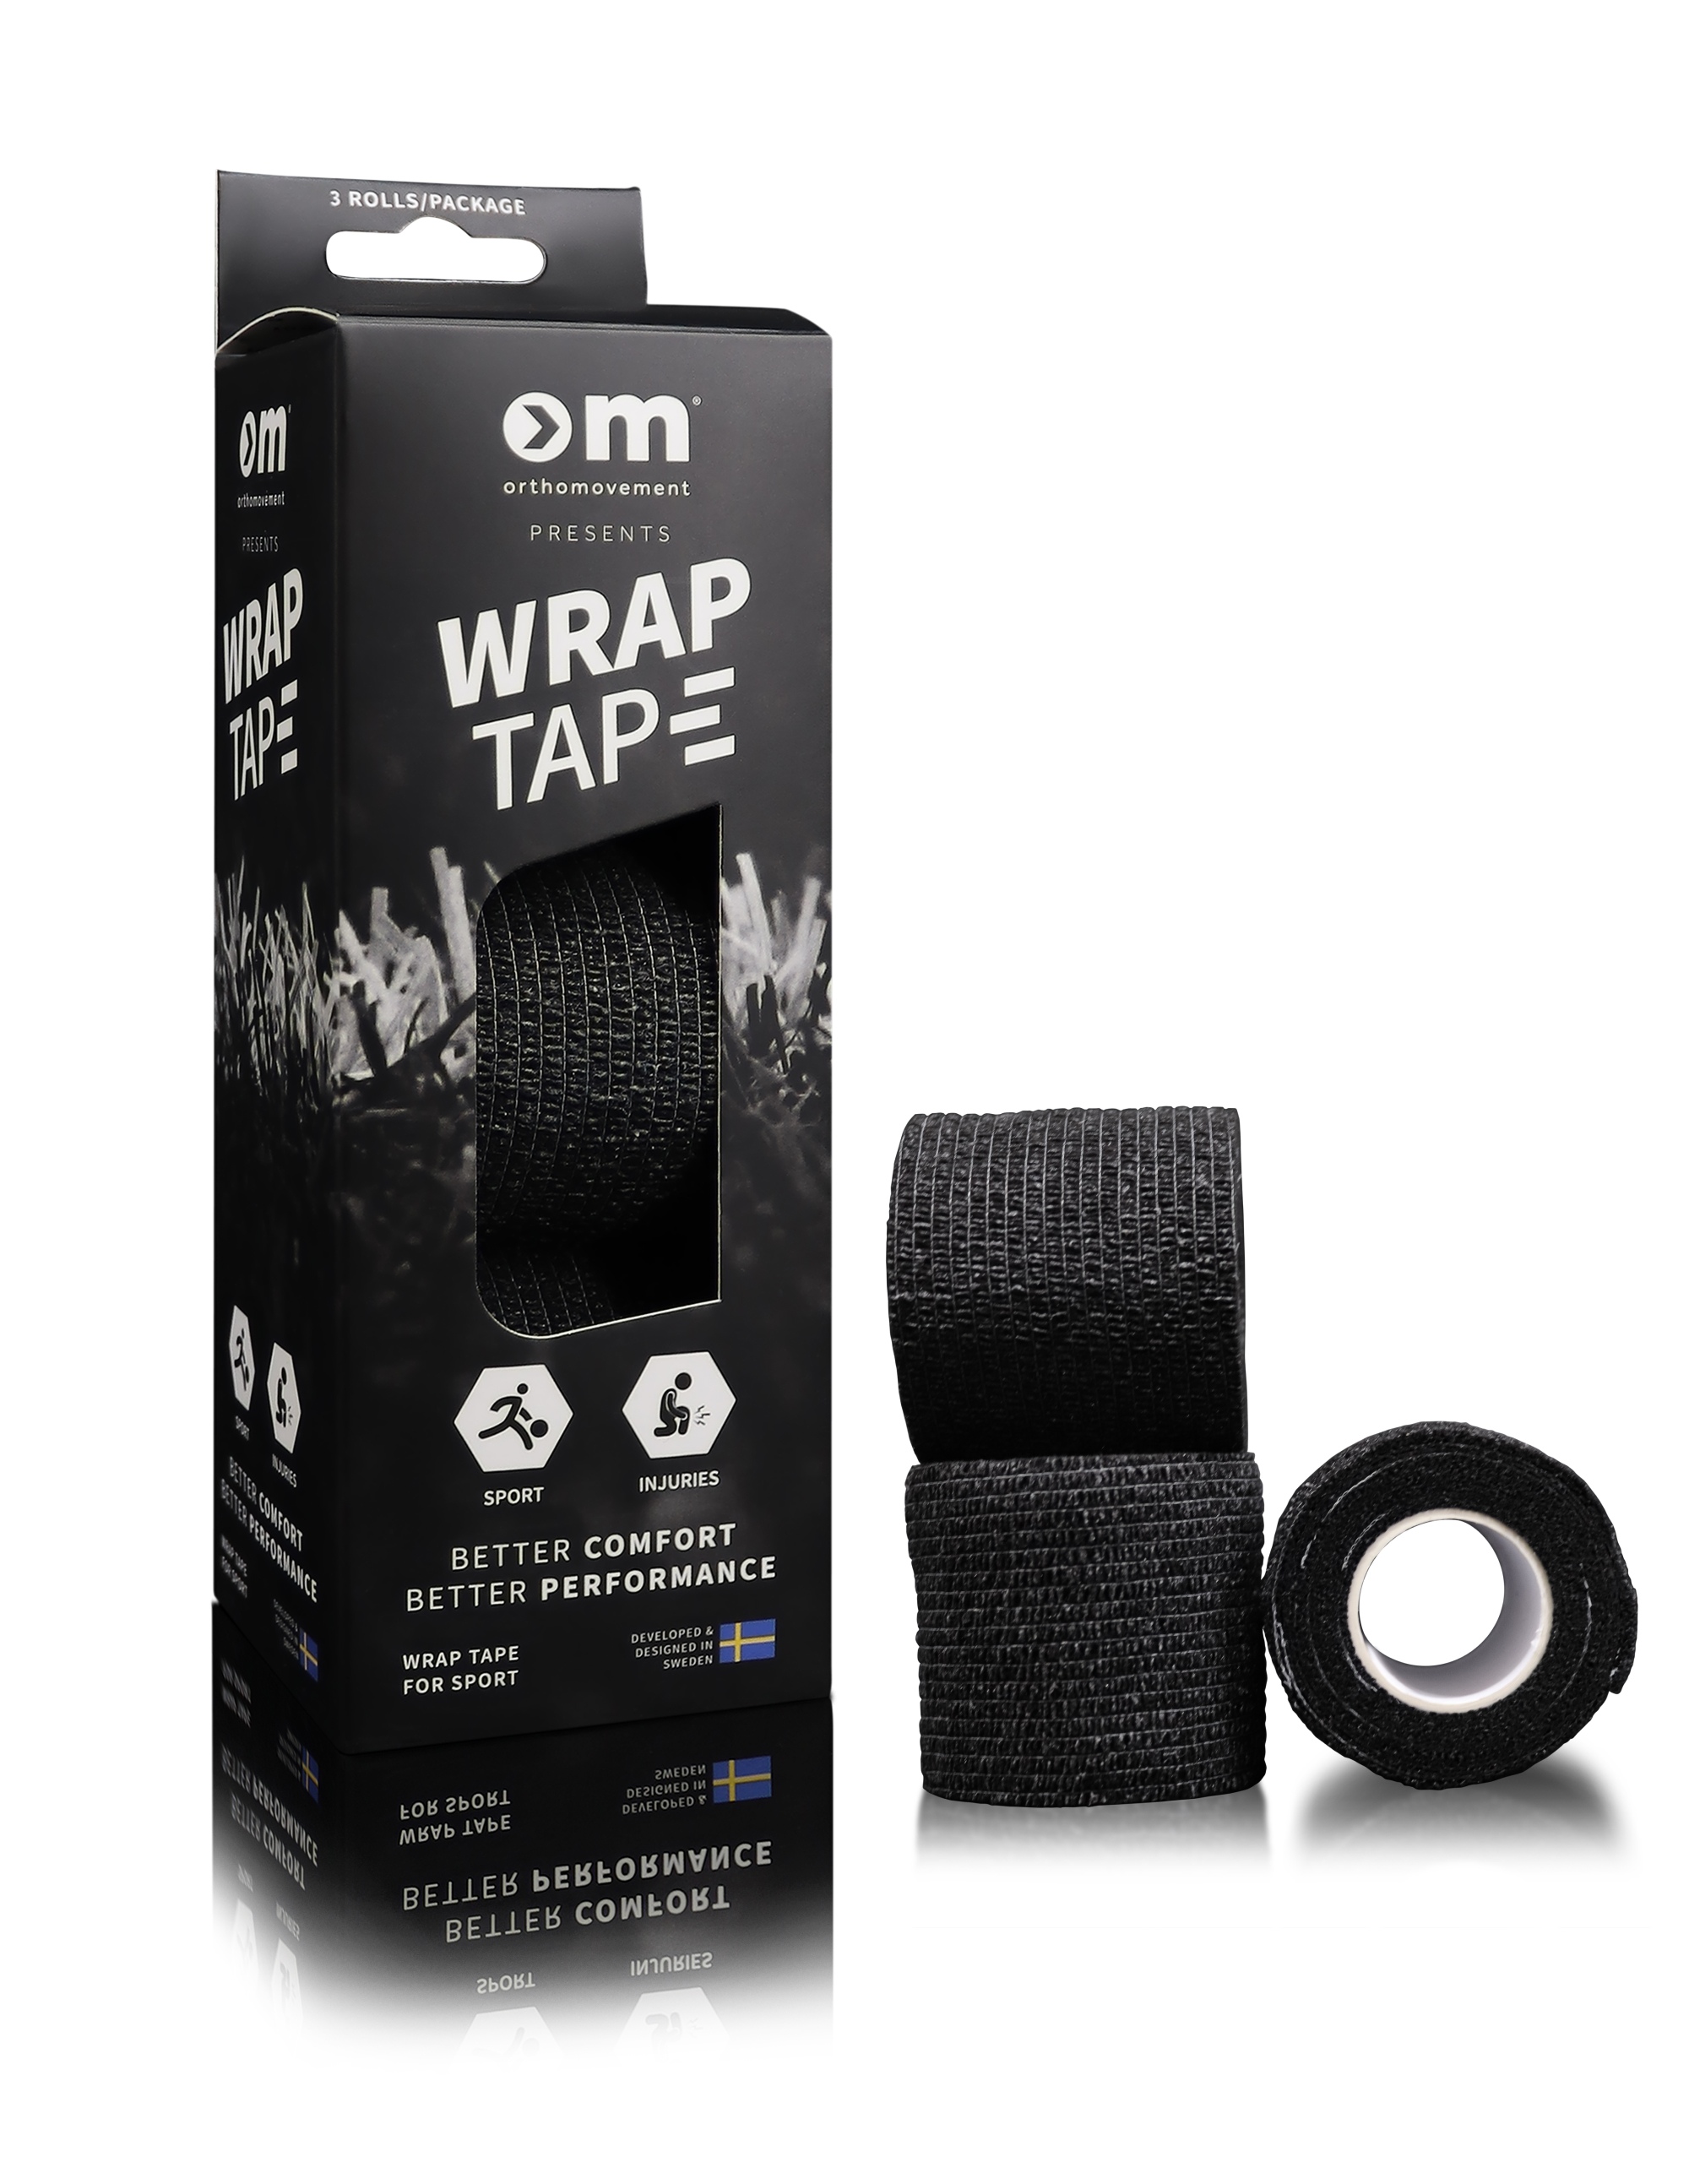 Tamy stabilizujce Ortho Movement Wrap Tape